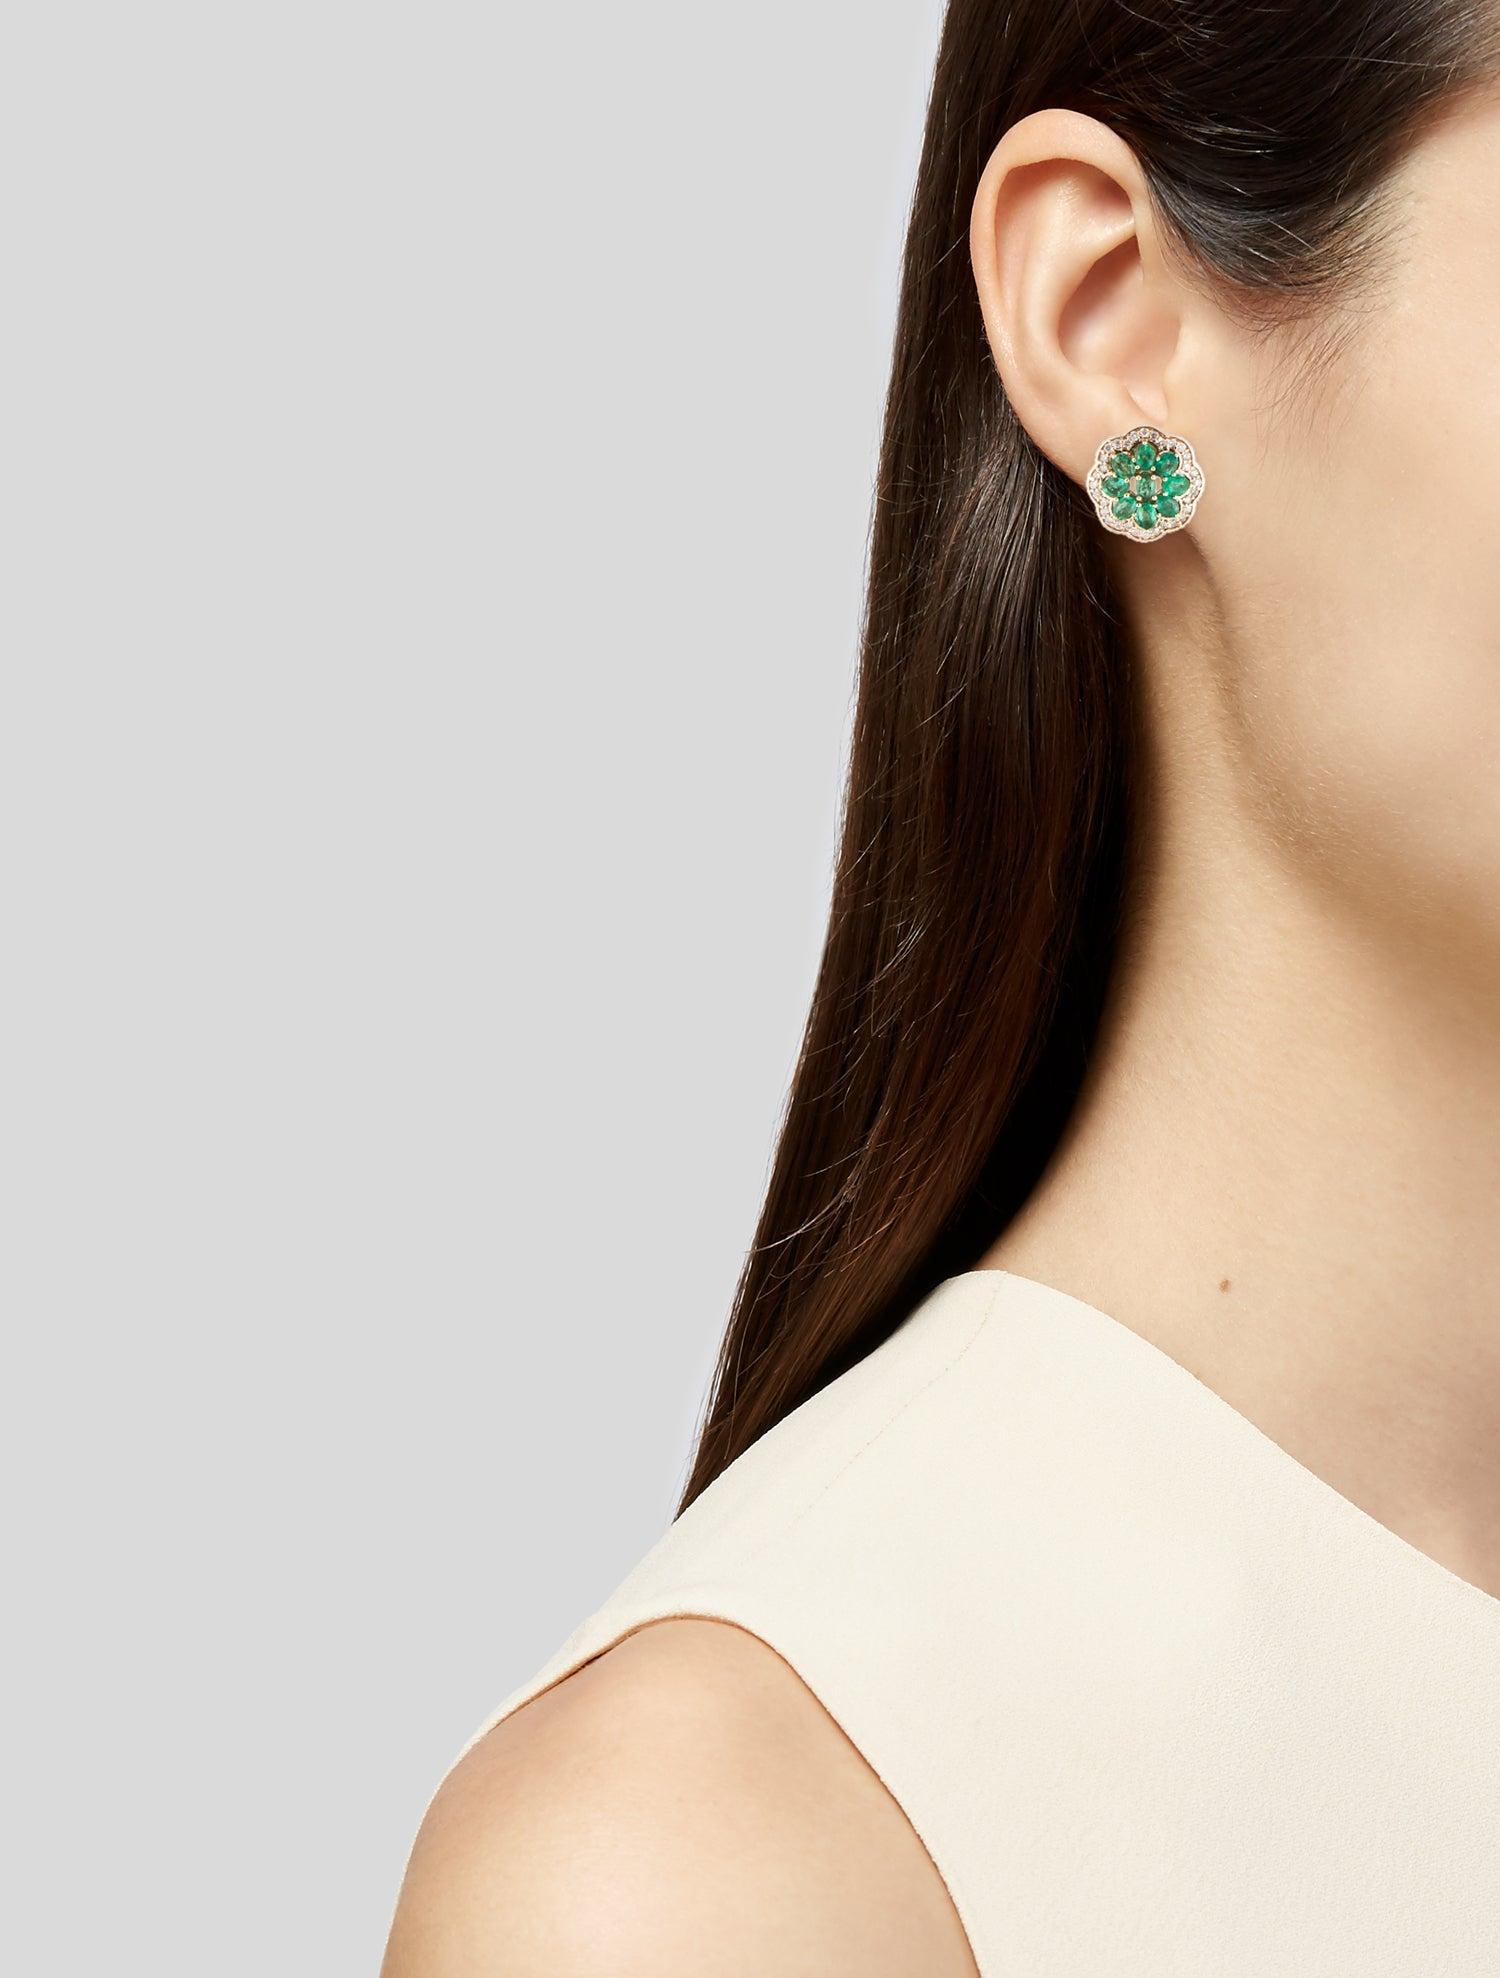 14K Emerald & Diamond Stud Earrings- Exquisite Gemstone Jewelry Timeless Glamour 1